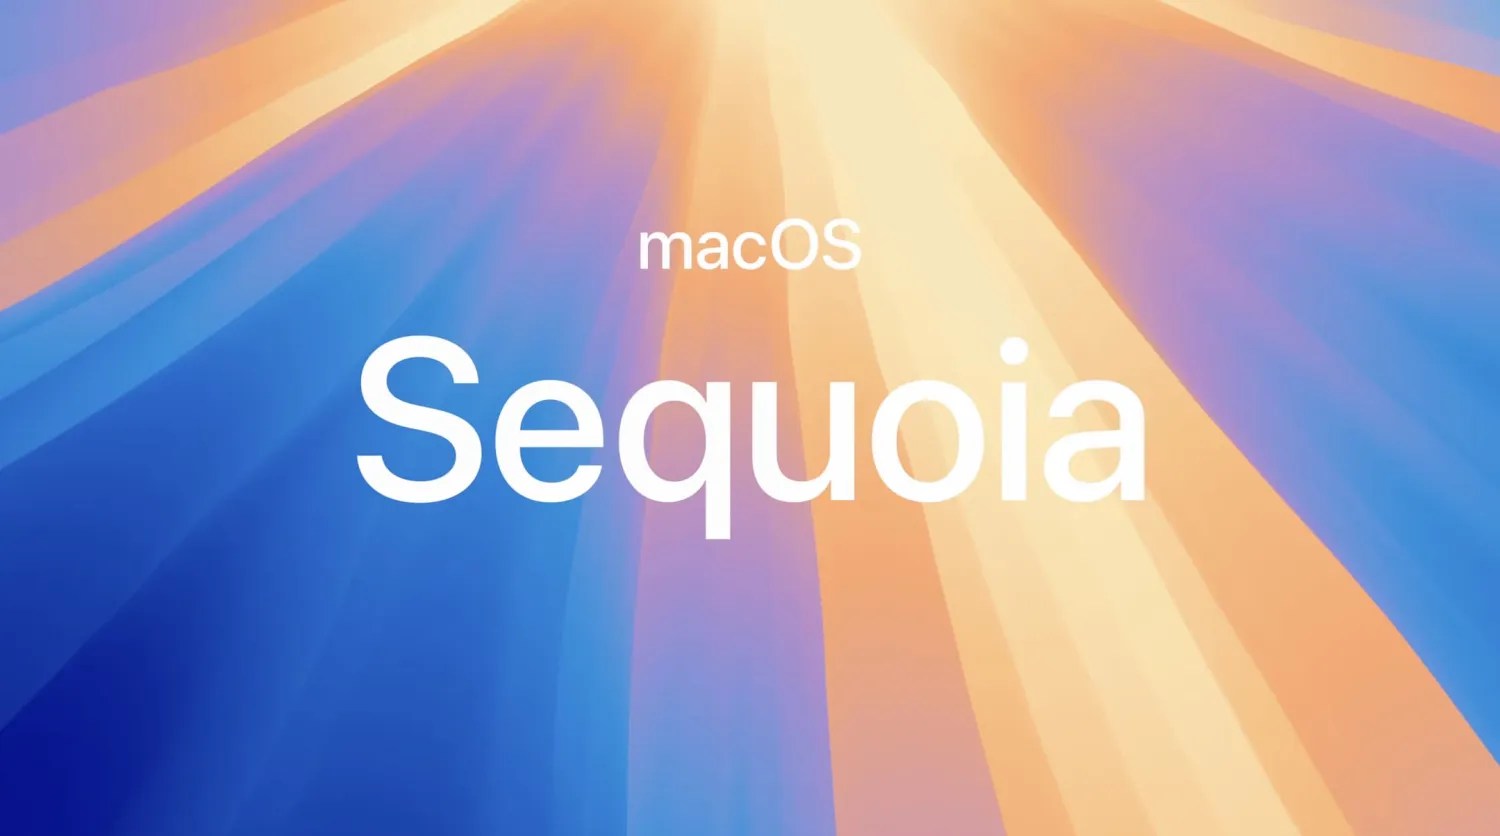 macOS Sequoia logo